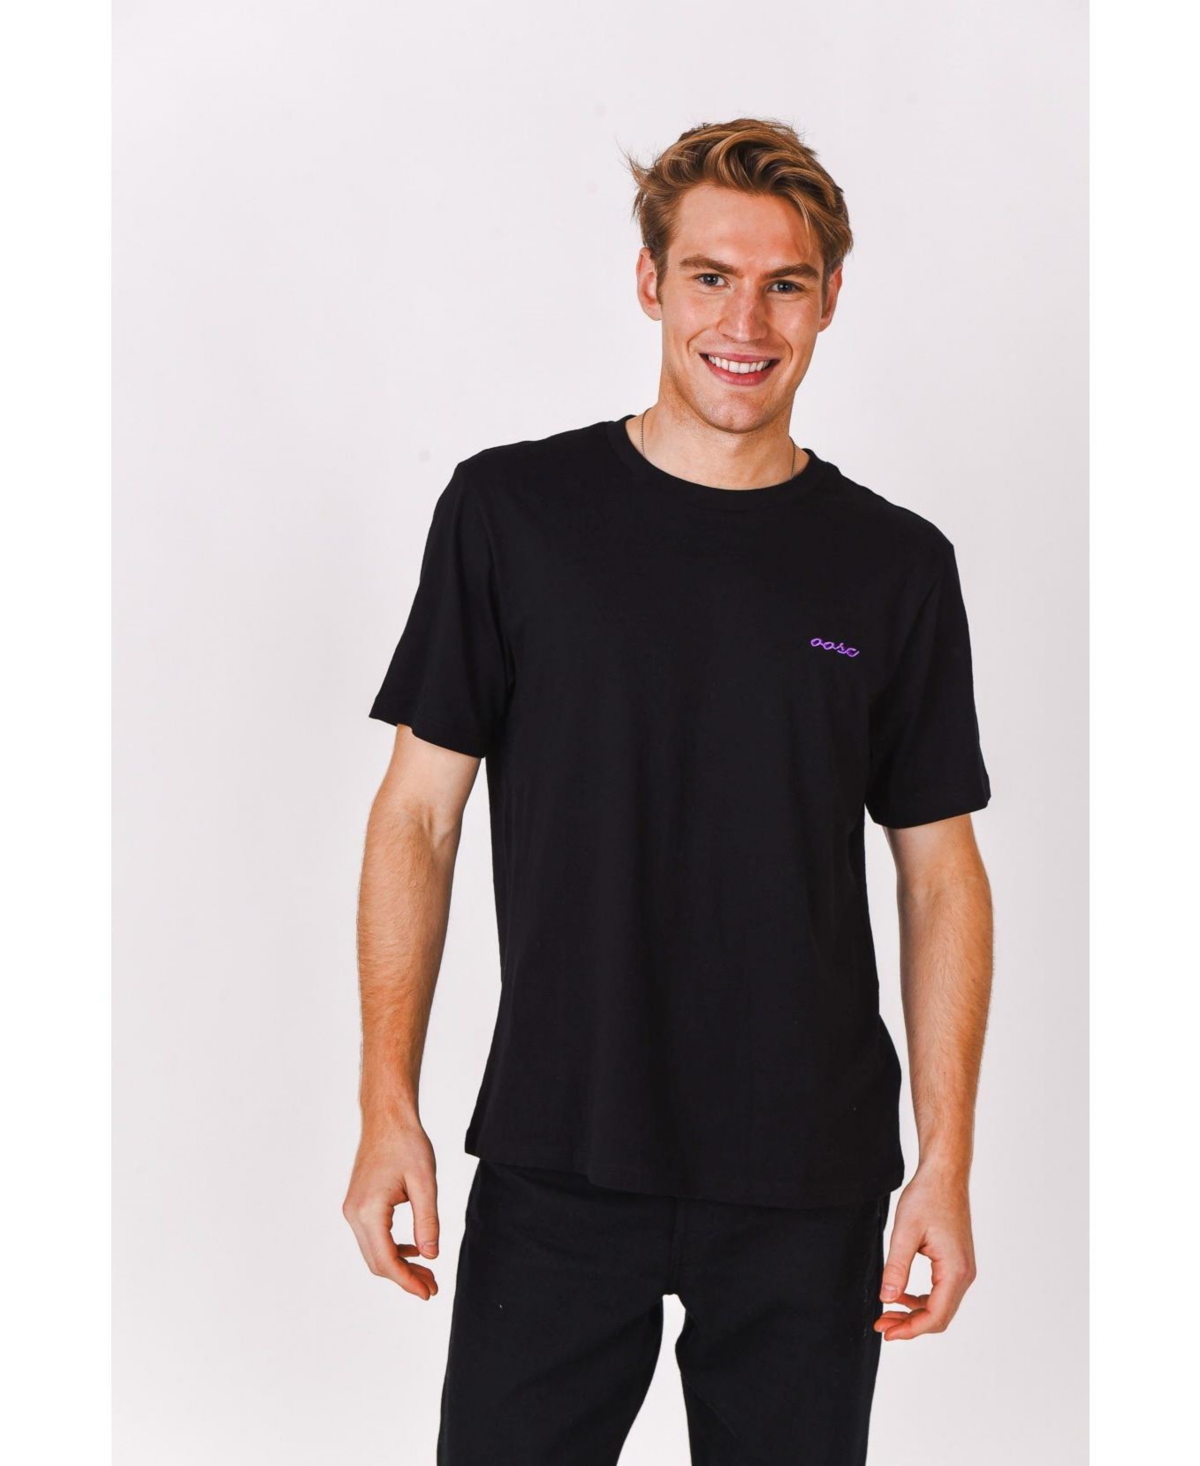 Penfold T-Shirt - Black